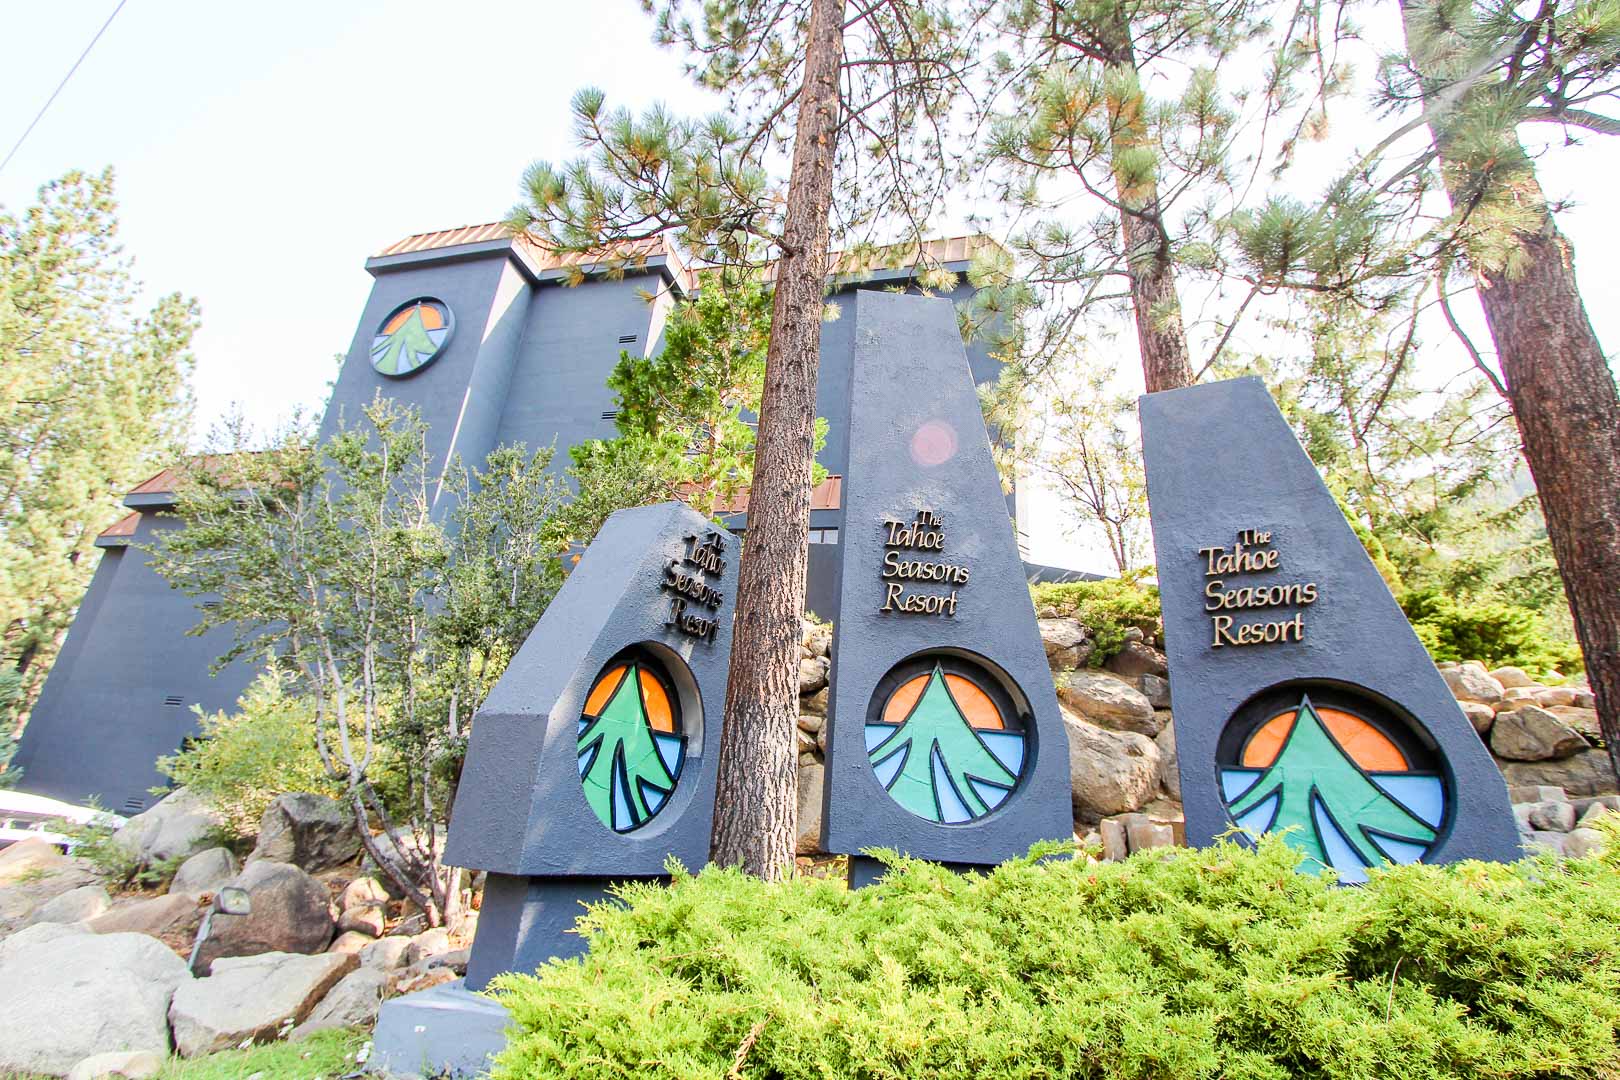 A stoic resort entrance at VRI's Tahoe Seasons Resort in California.